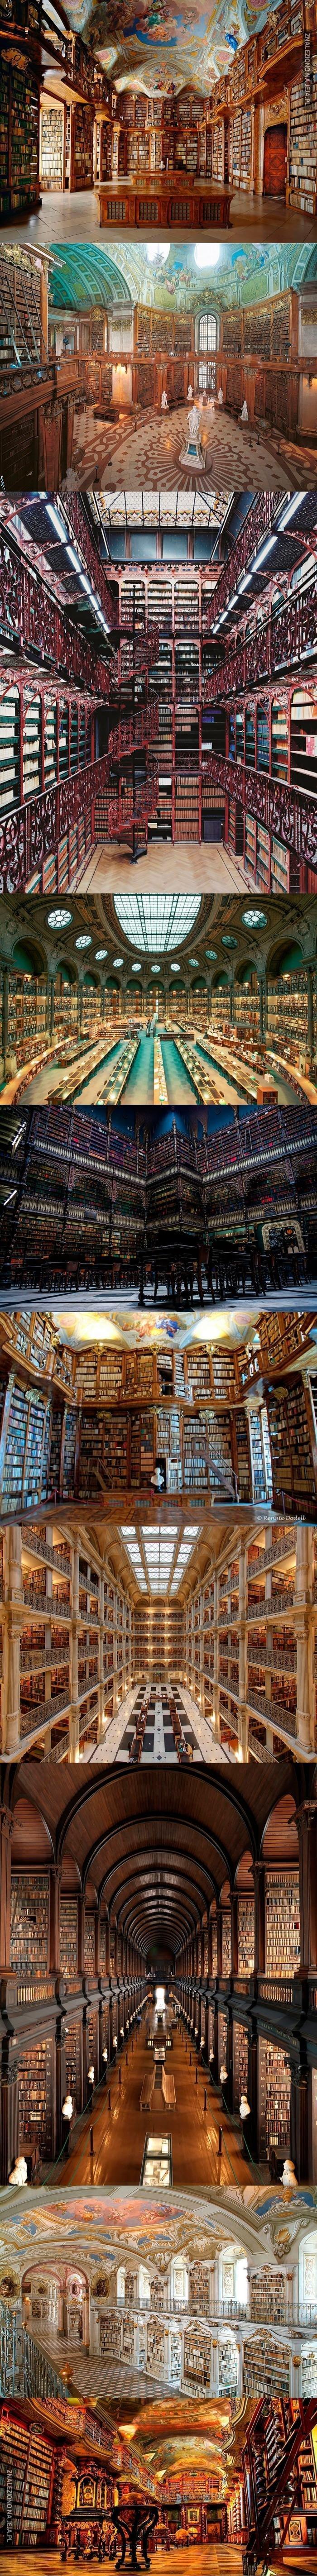 Biblioteki świata